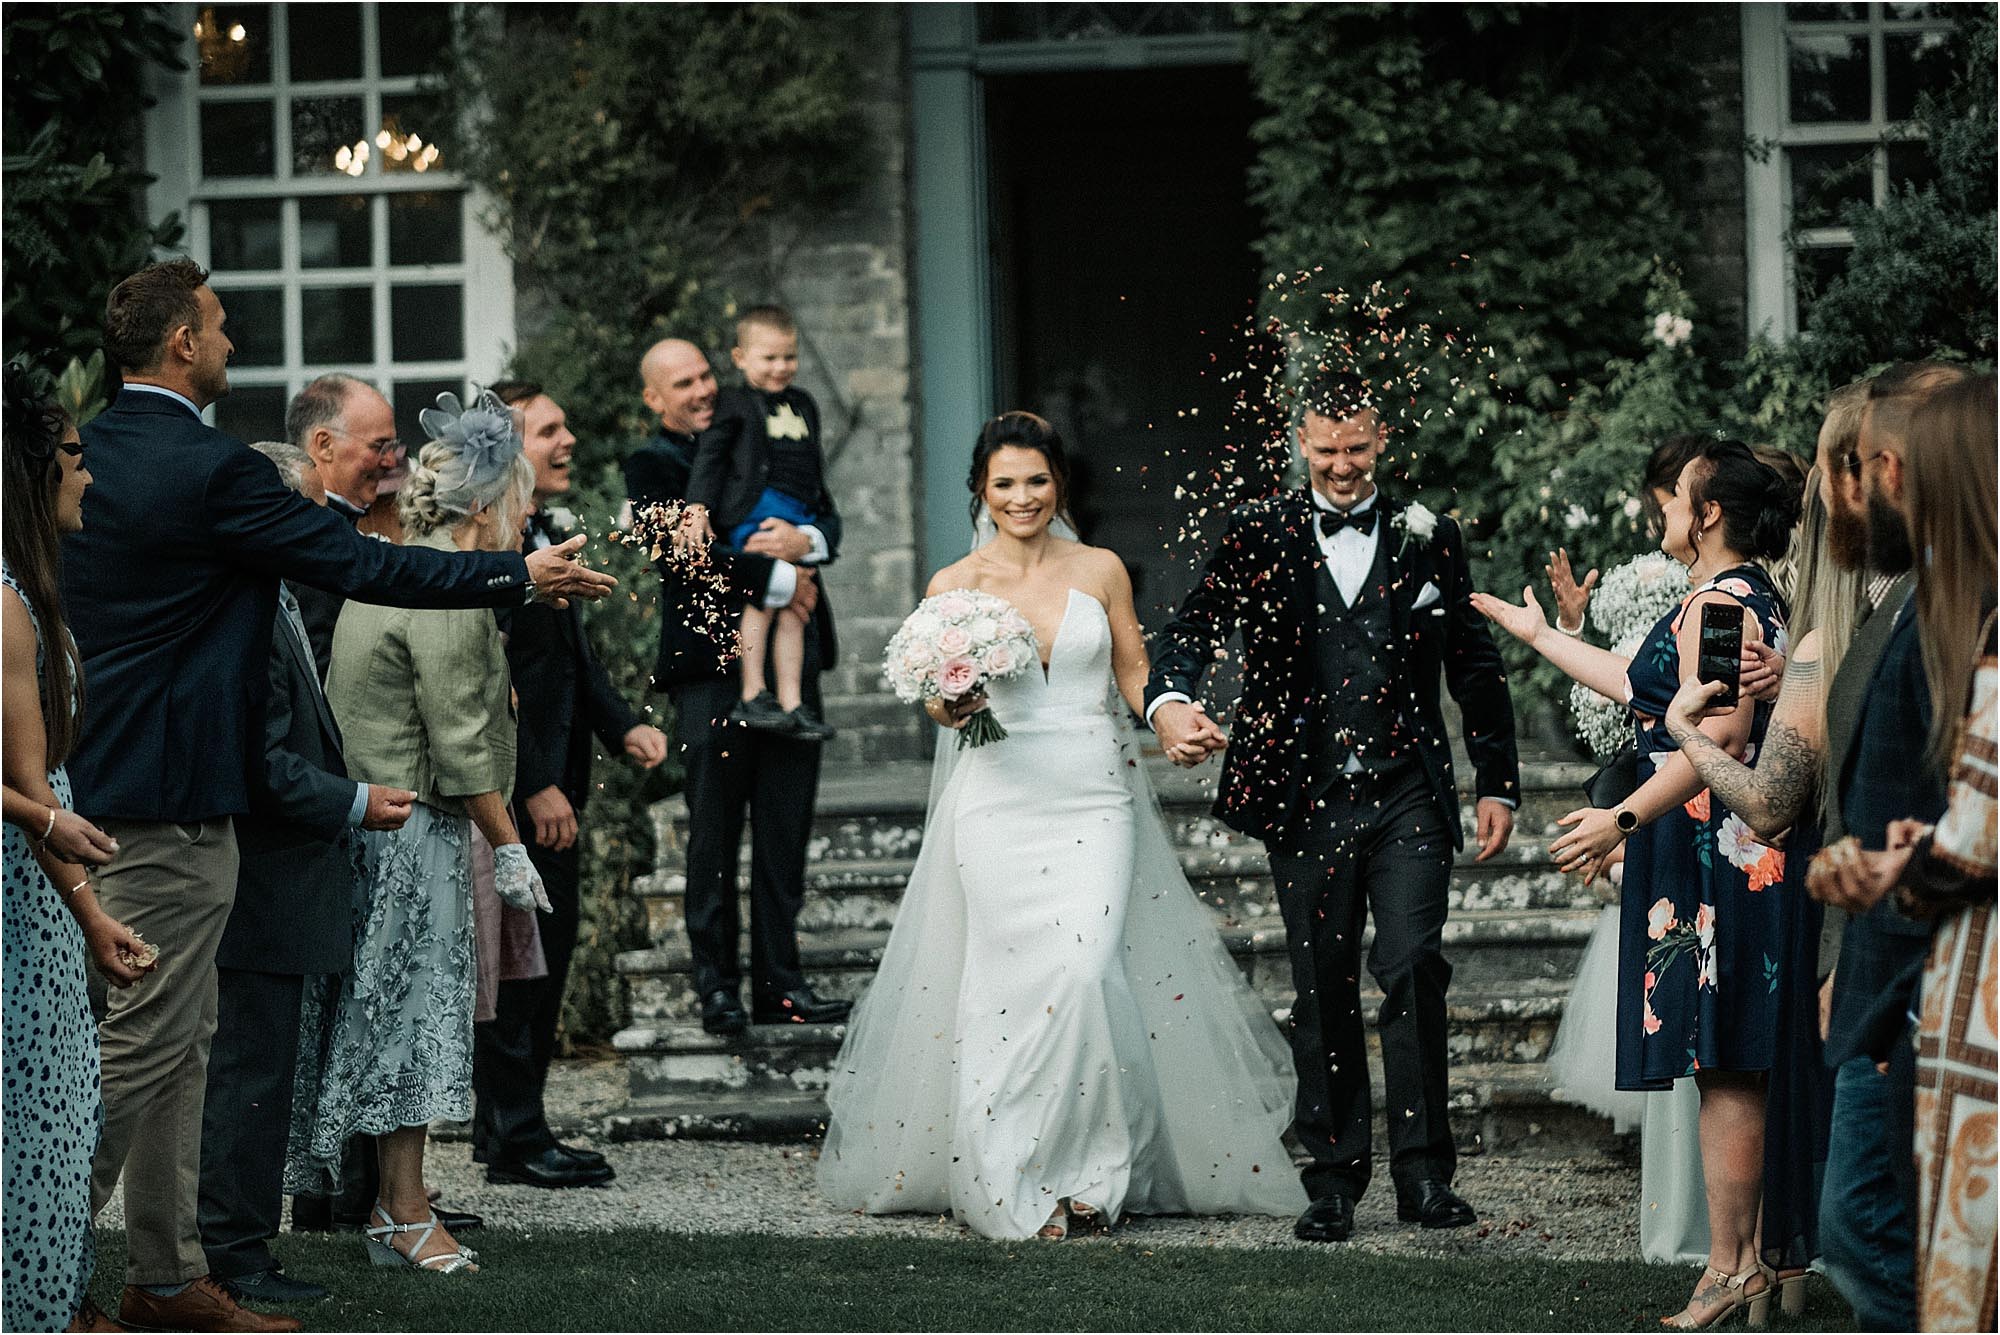 Rachel and Duncan's Kingston Estate black tie wedding in Devon. Photographer credit Younger Photography